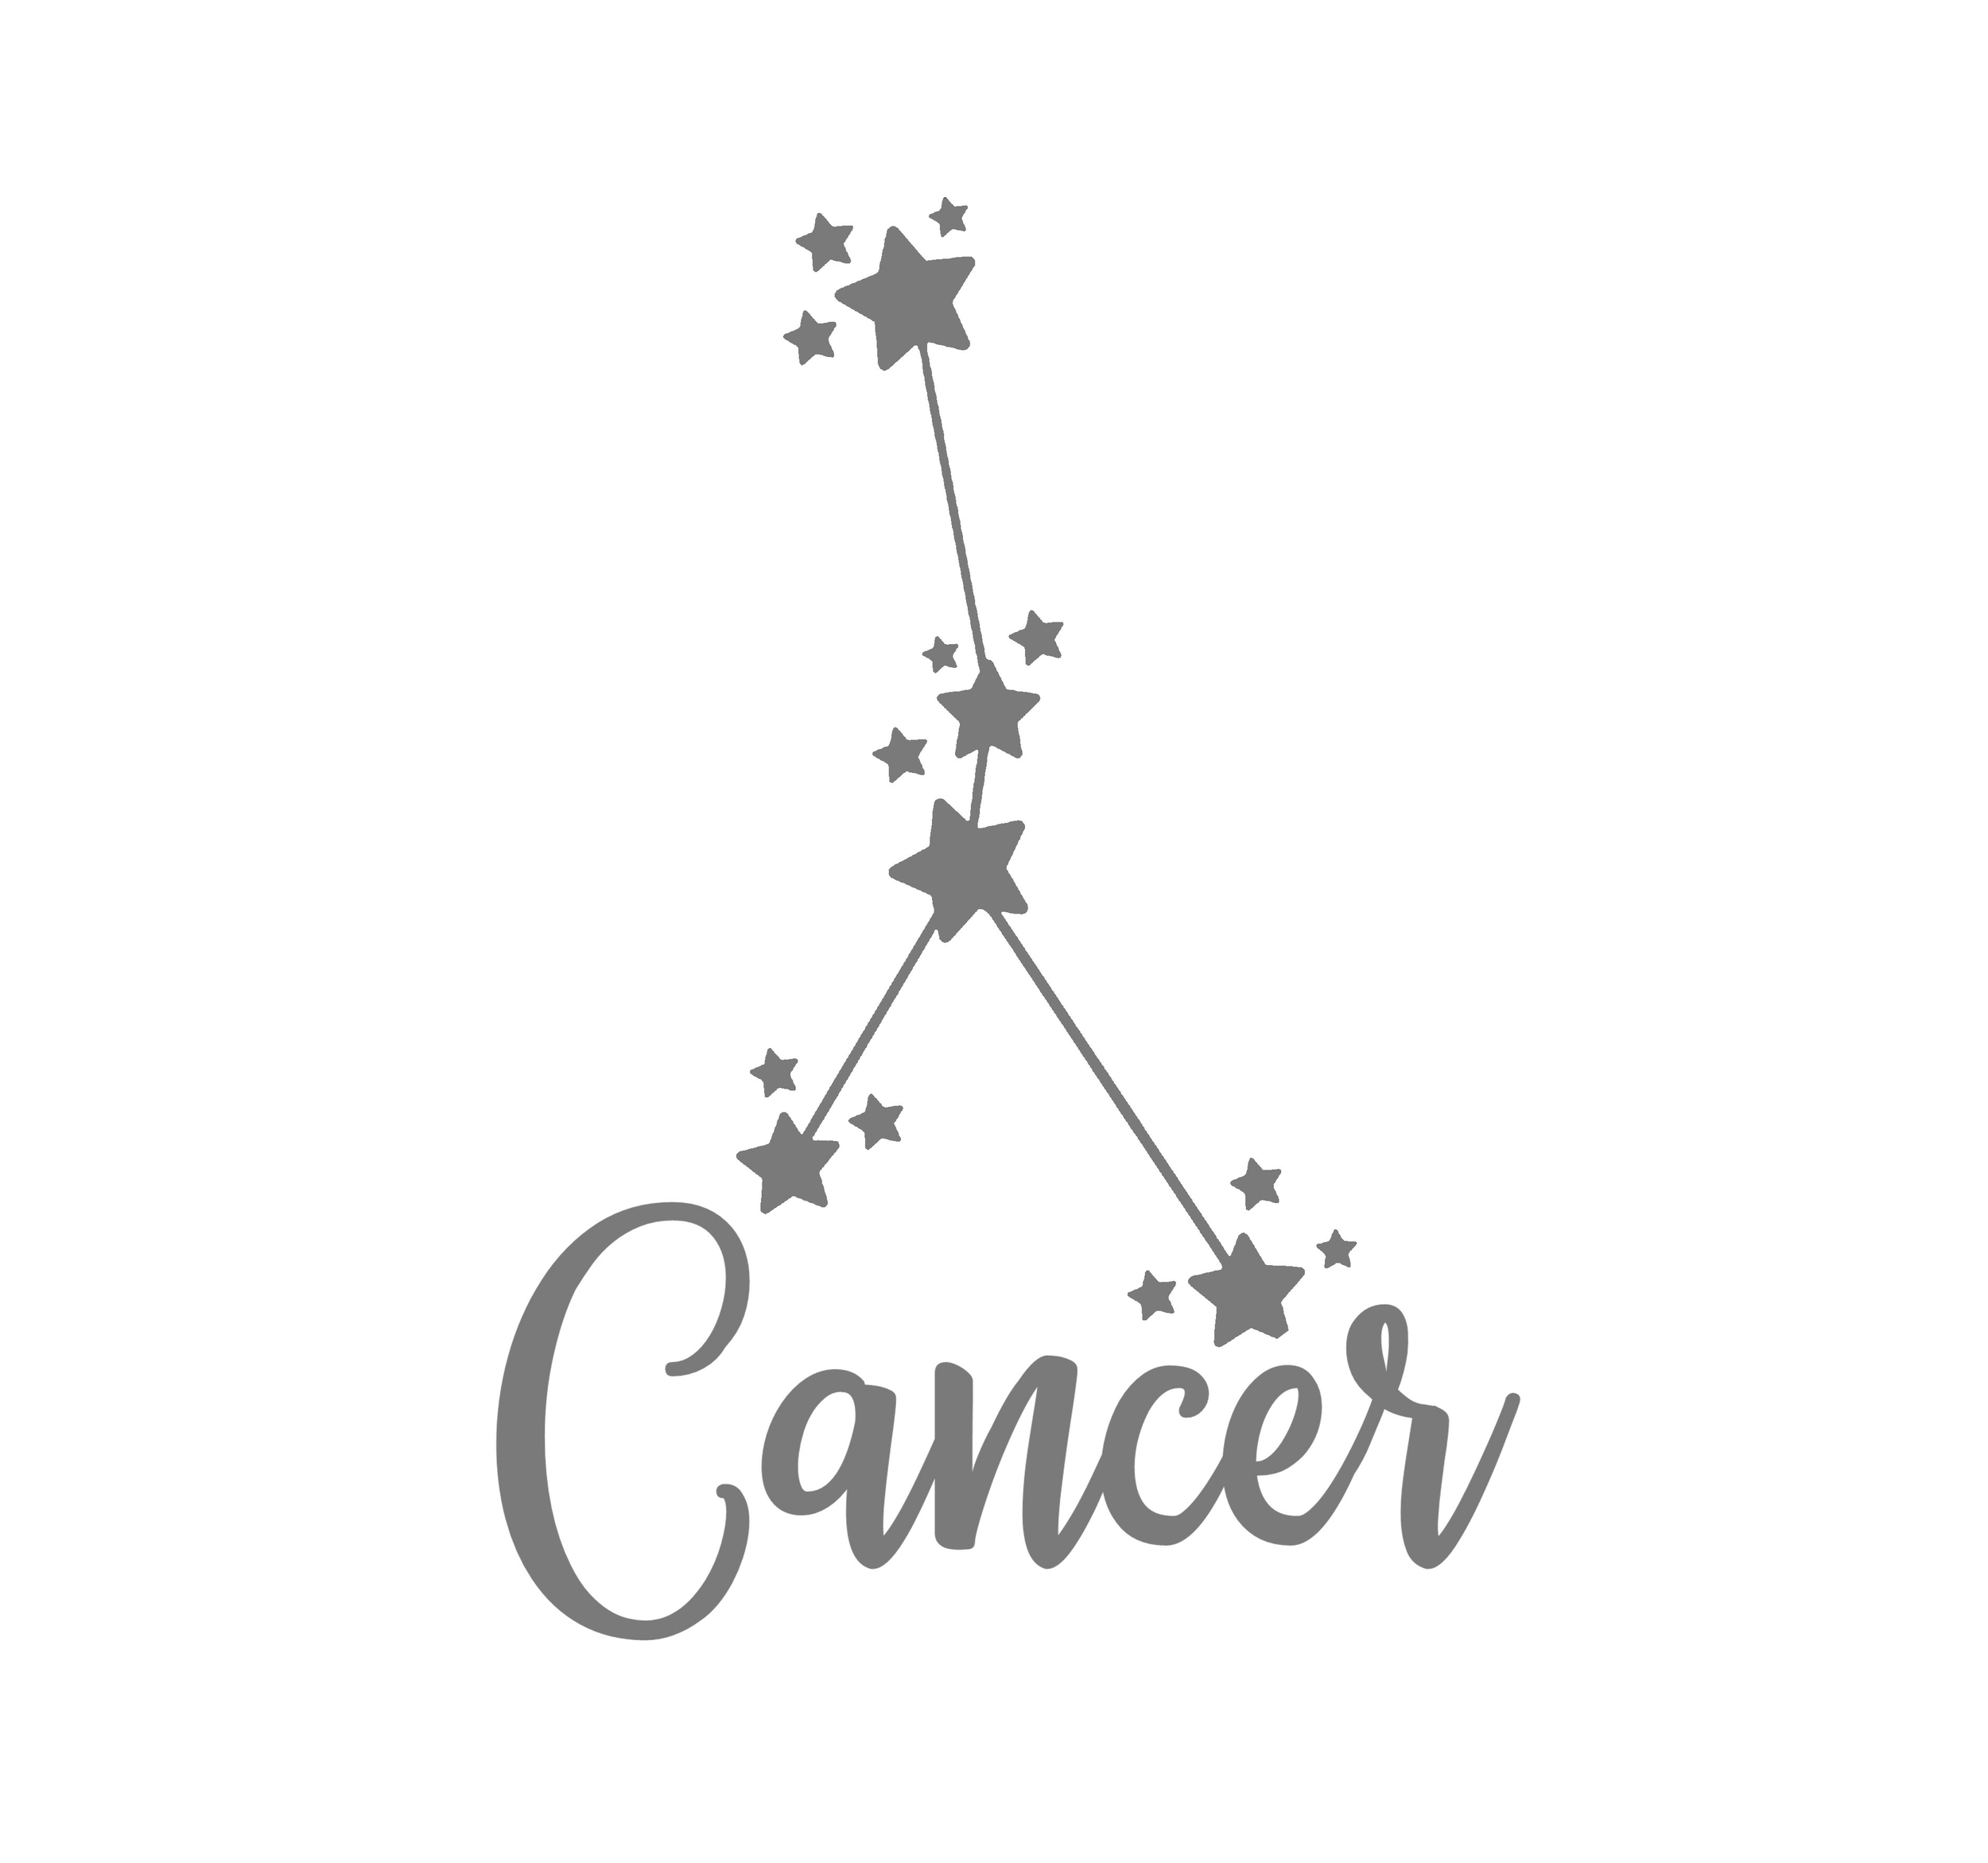 cancer zodiaque motif thermocollant